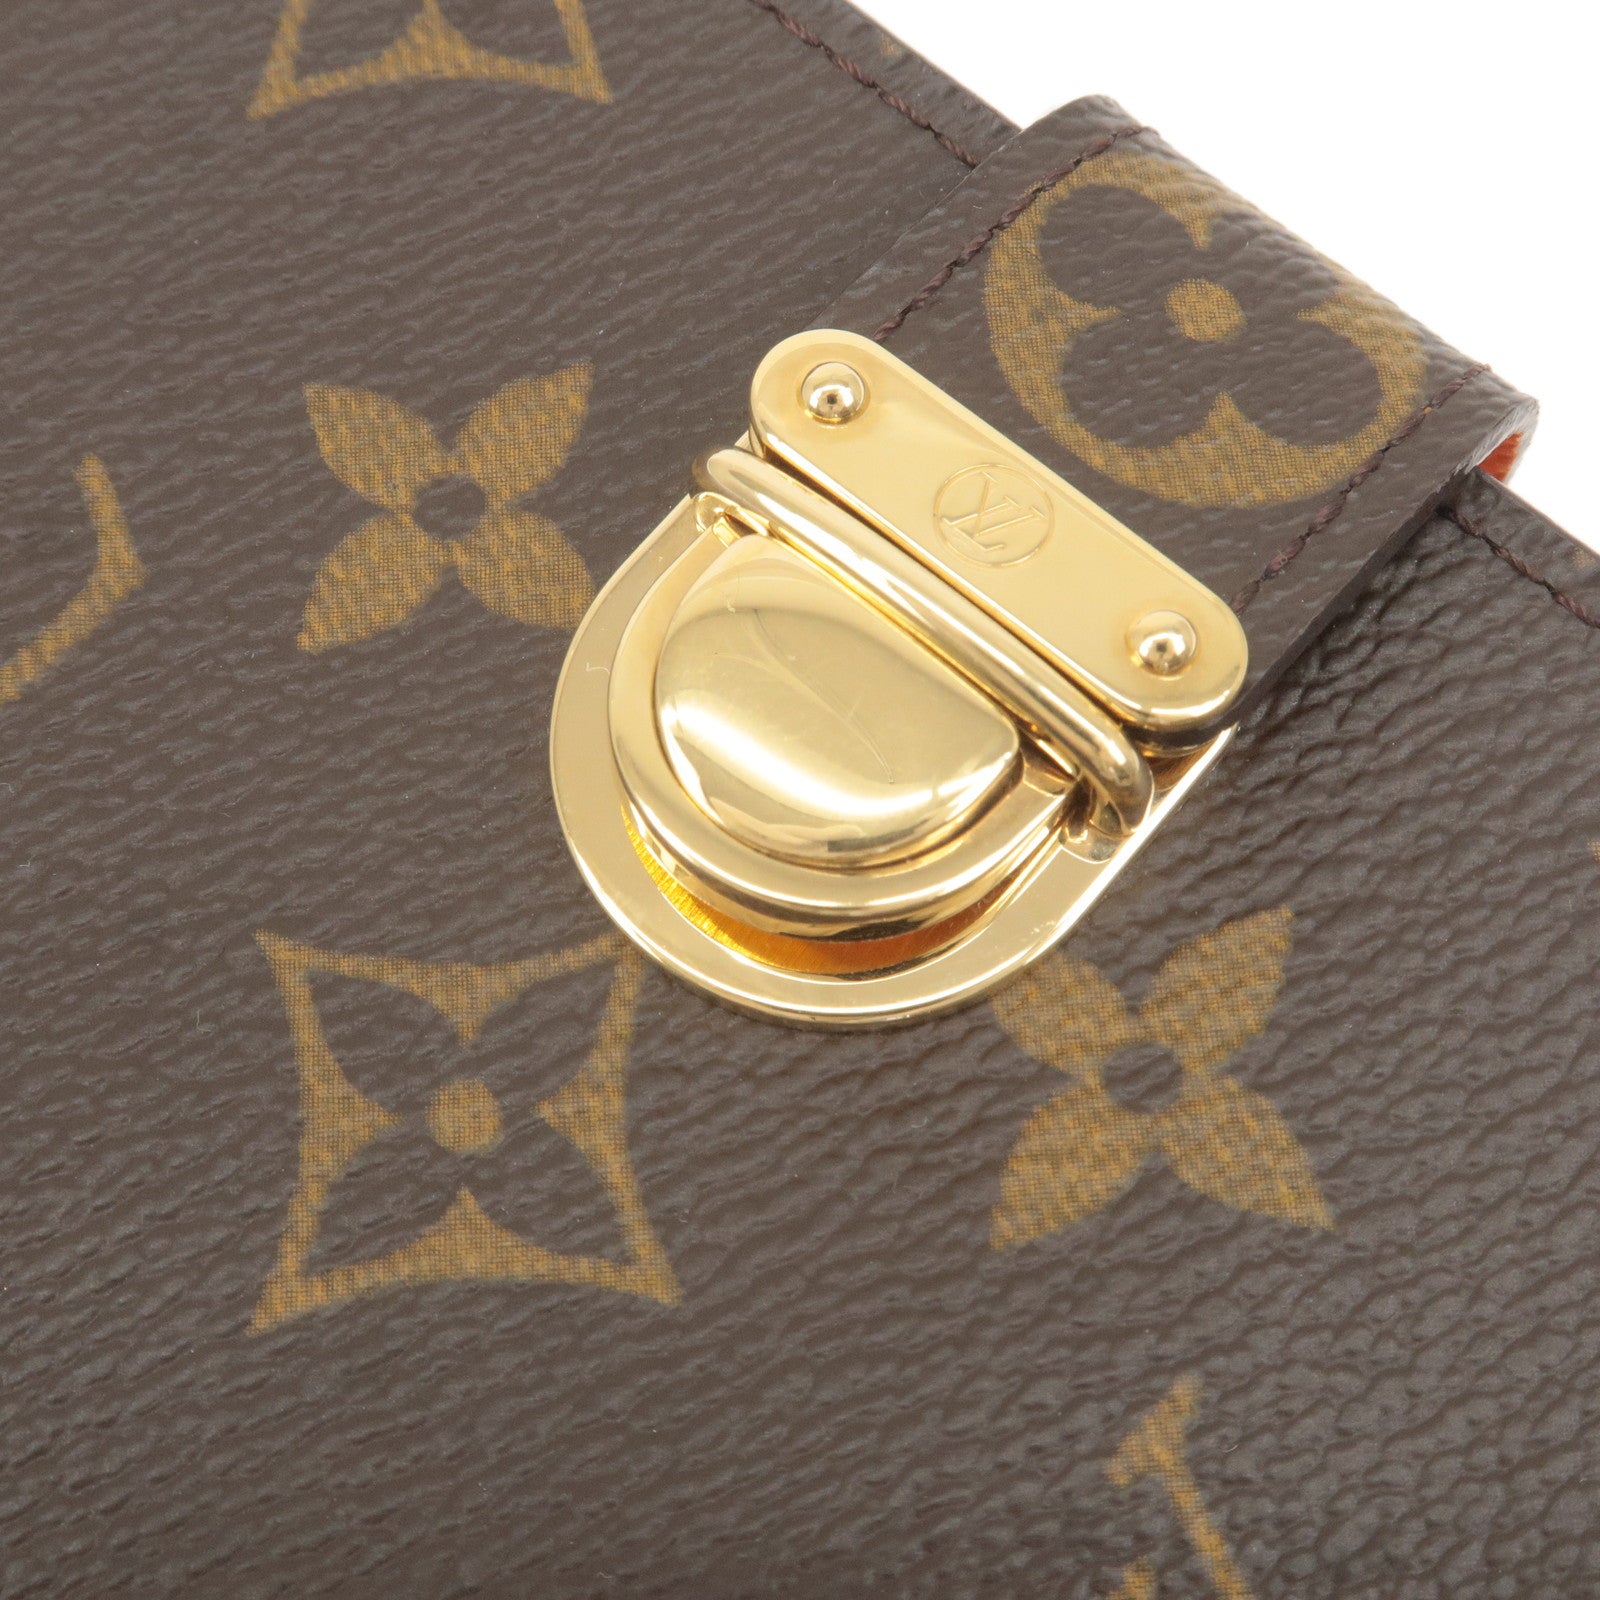 Louis-Vuitton-Monogram-Agenda-Koala-Planner-Cover-R21015 – dct-ep_vintage  luxury Store